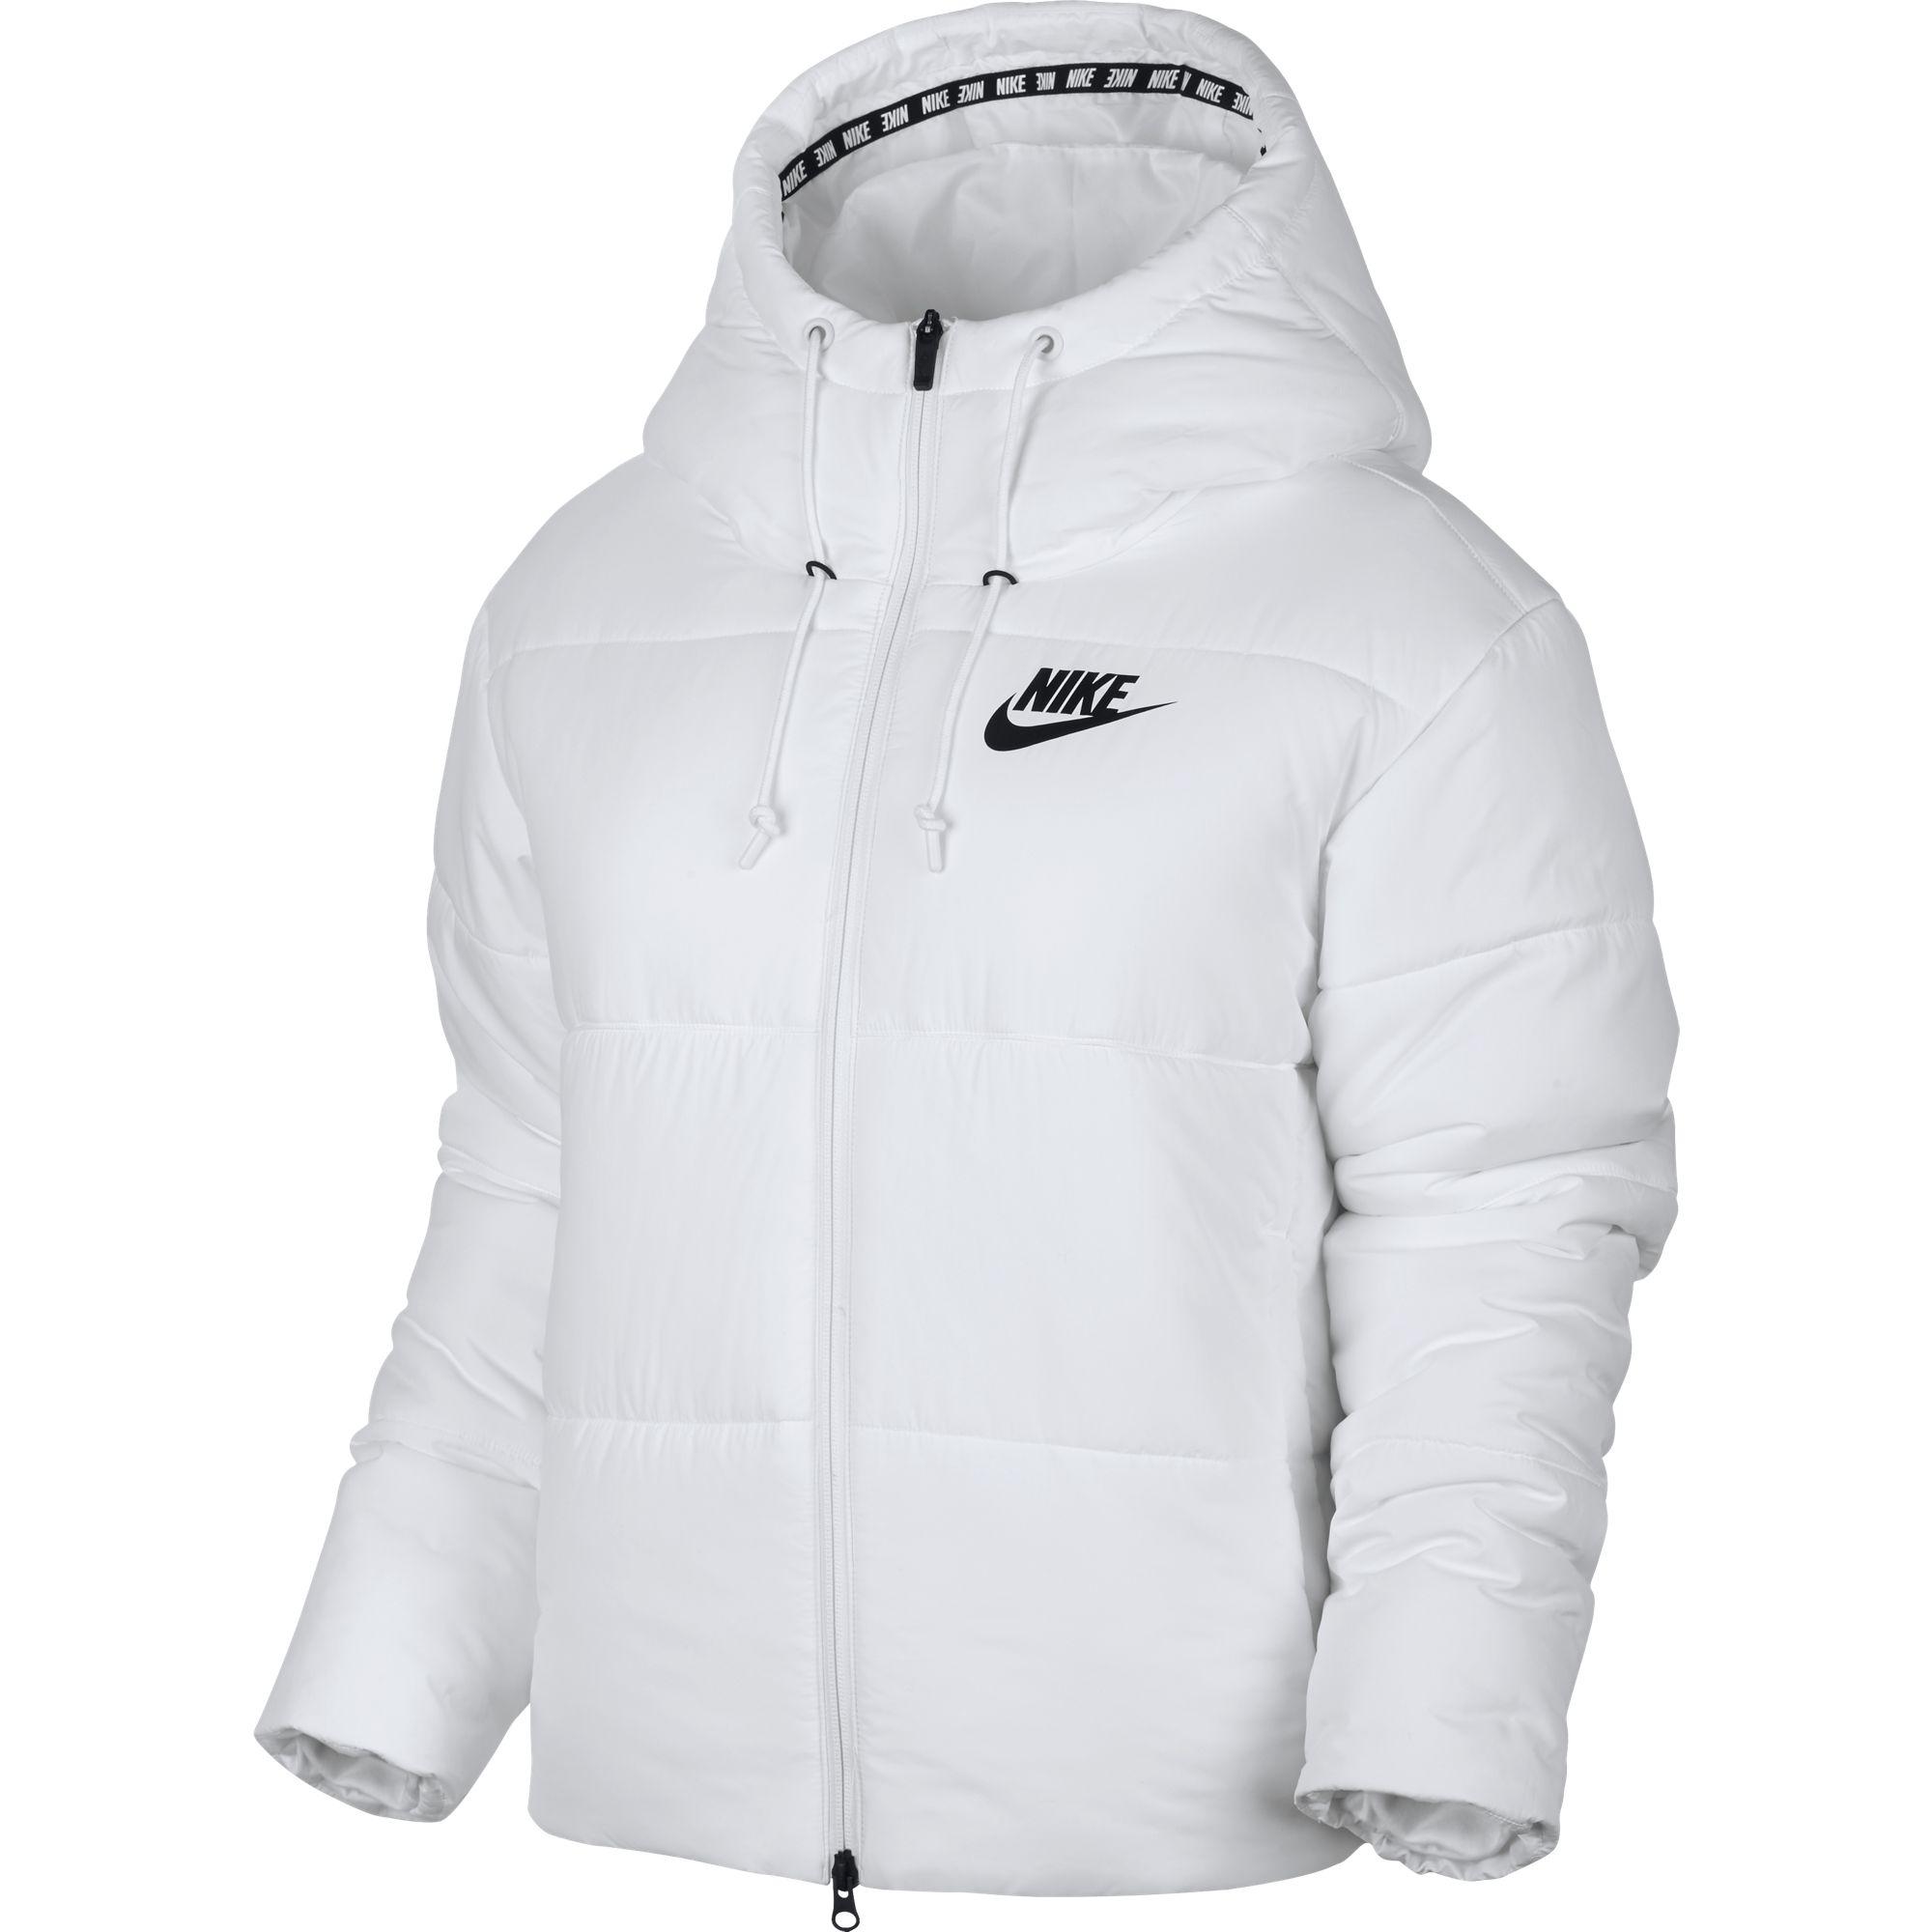 nike white jacket womens